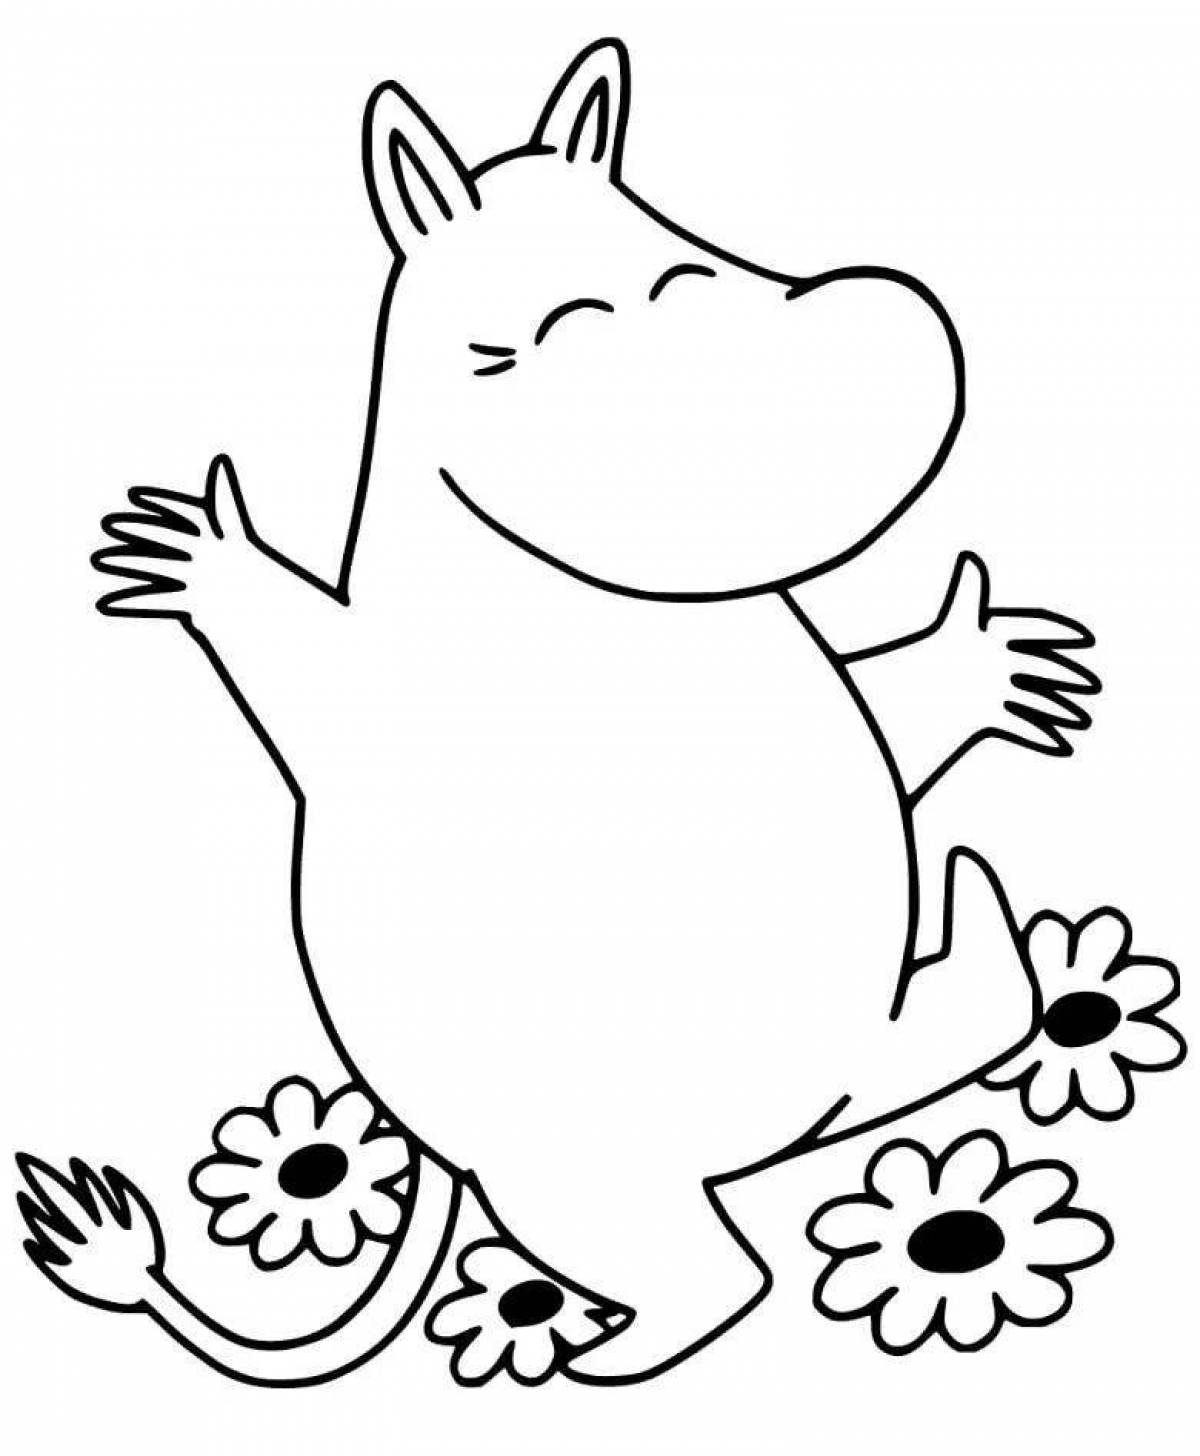 Moomin coloring page Moomin trolls